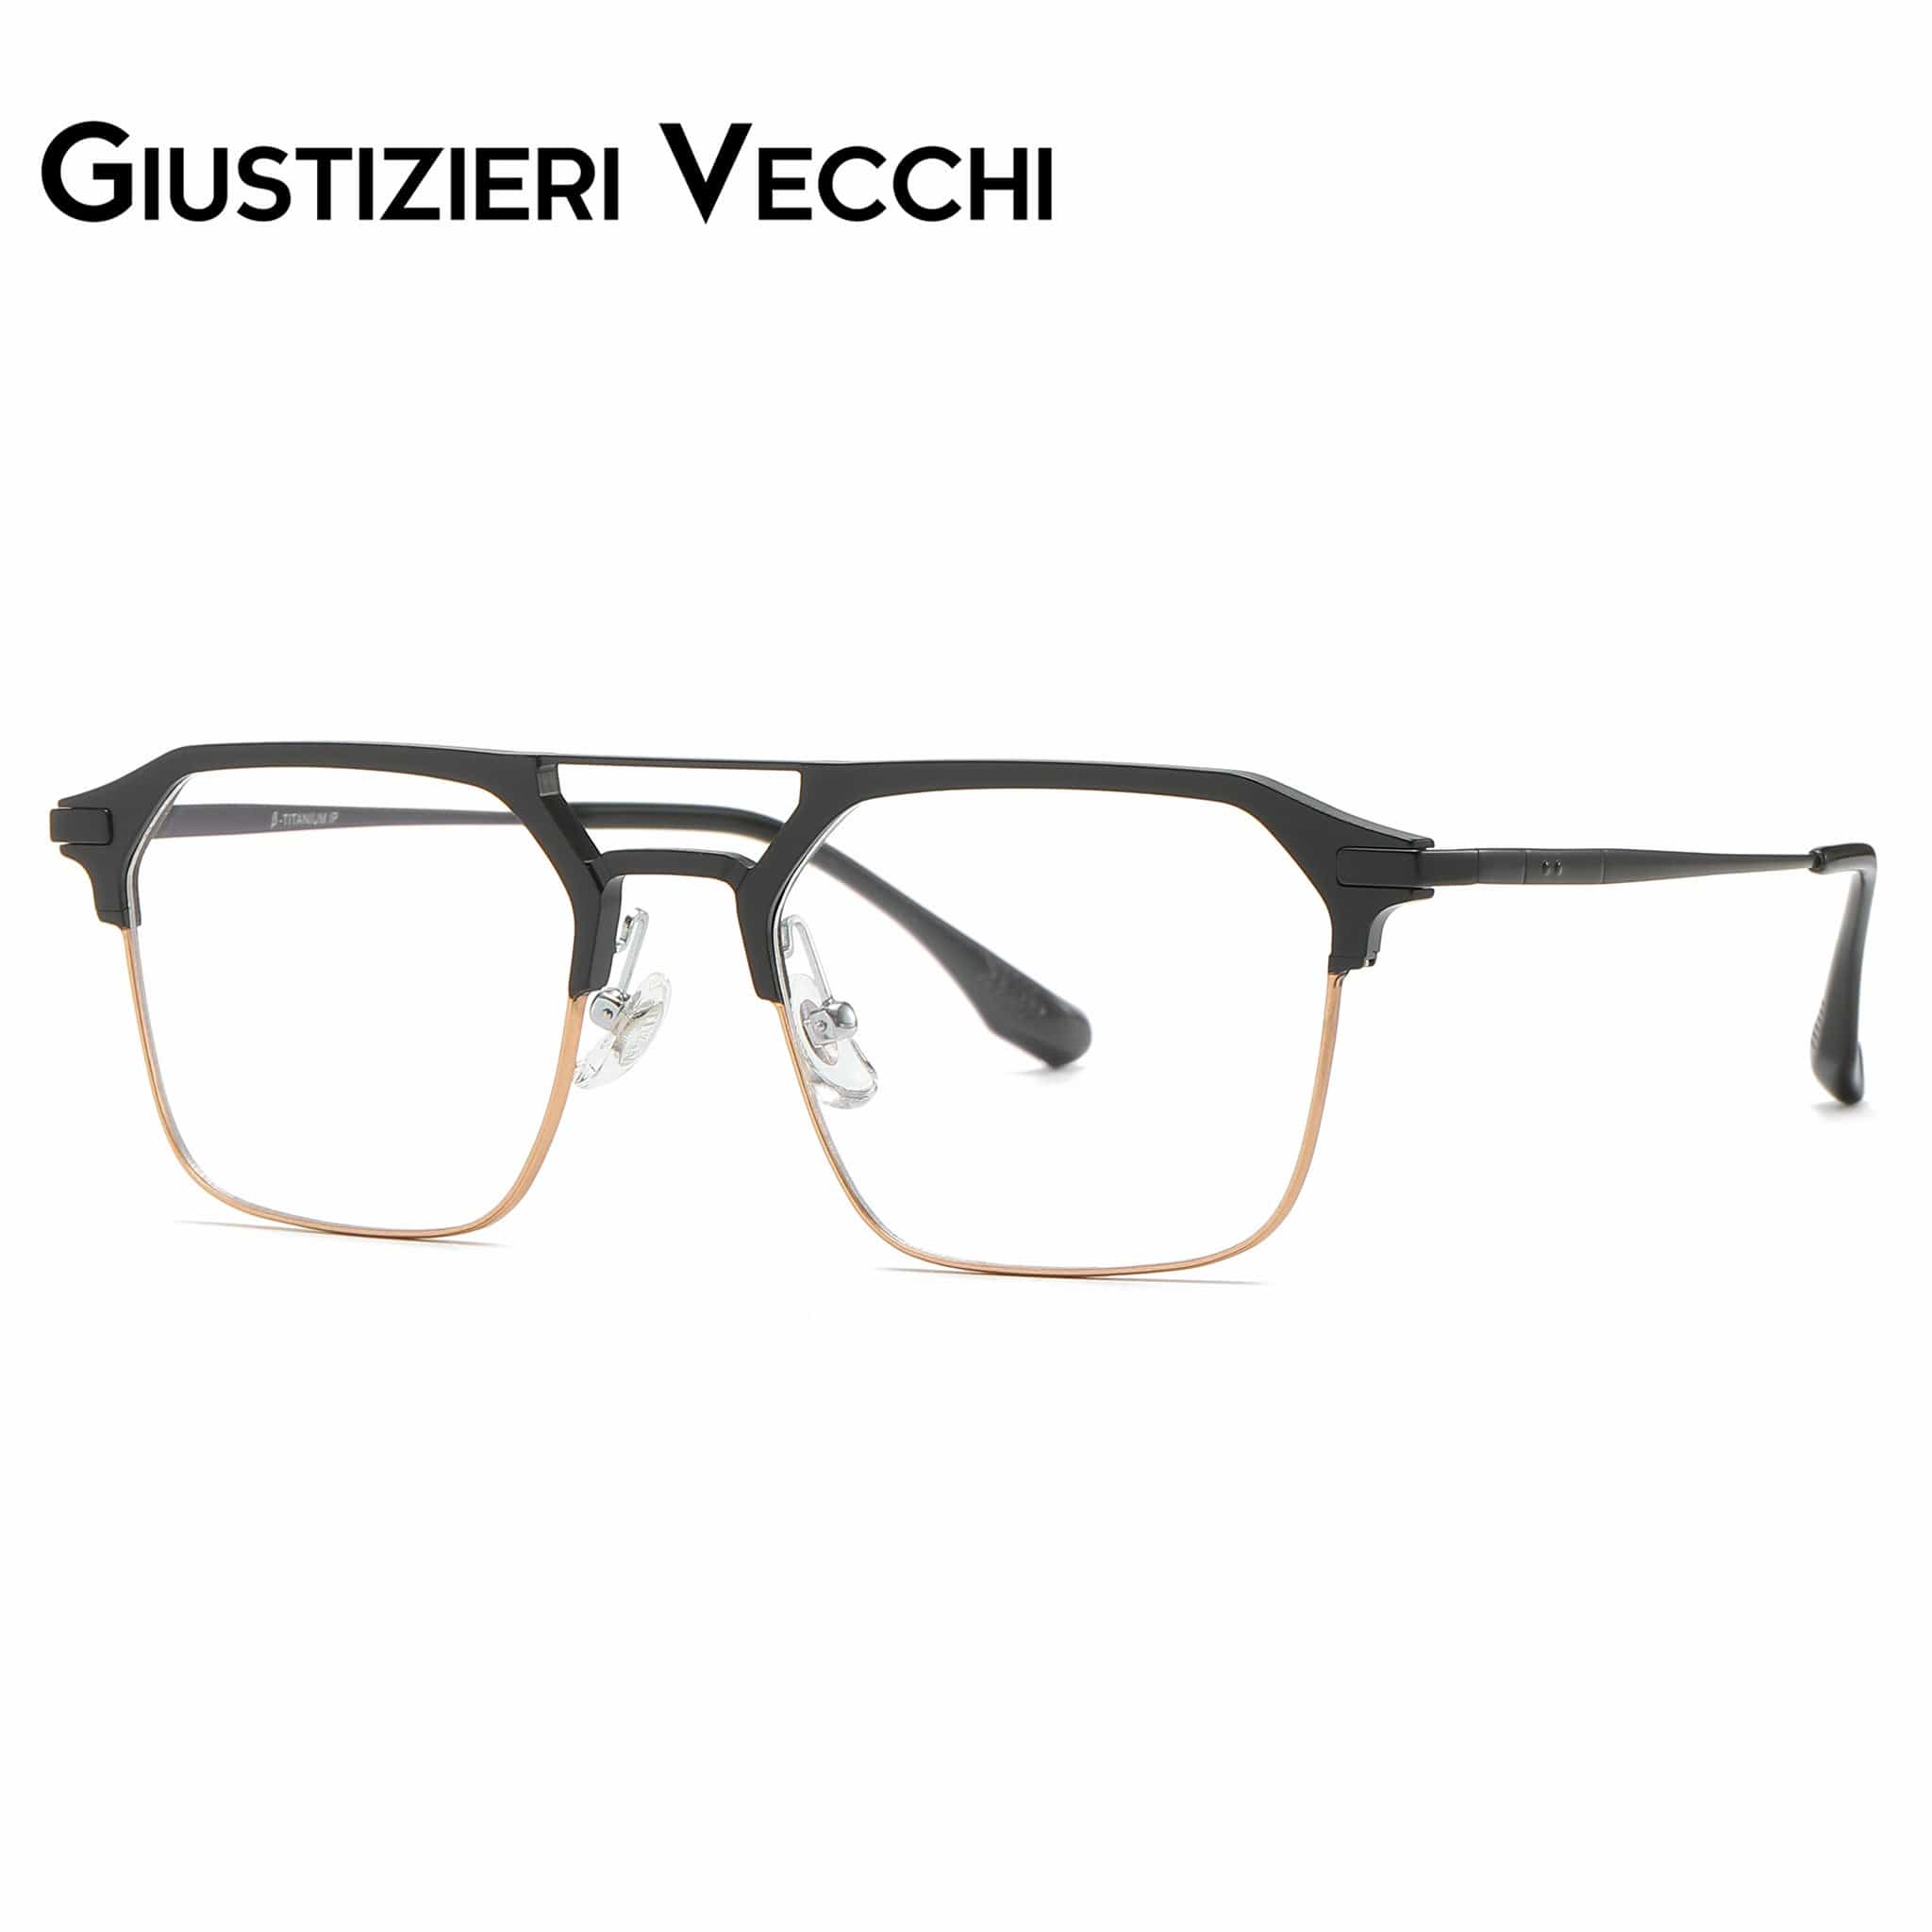 GIUSTIZIERI VECCHI Eyeglasses IceBlast Duo